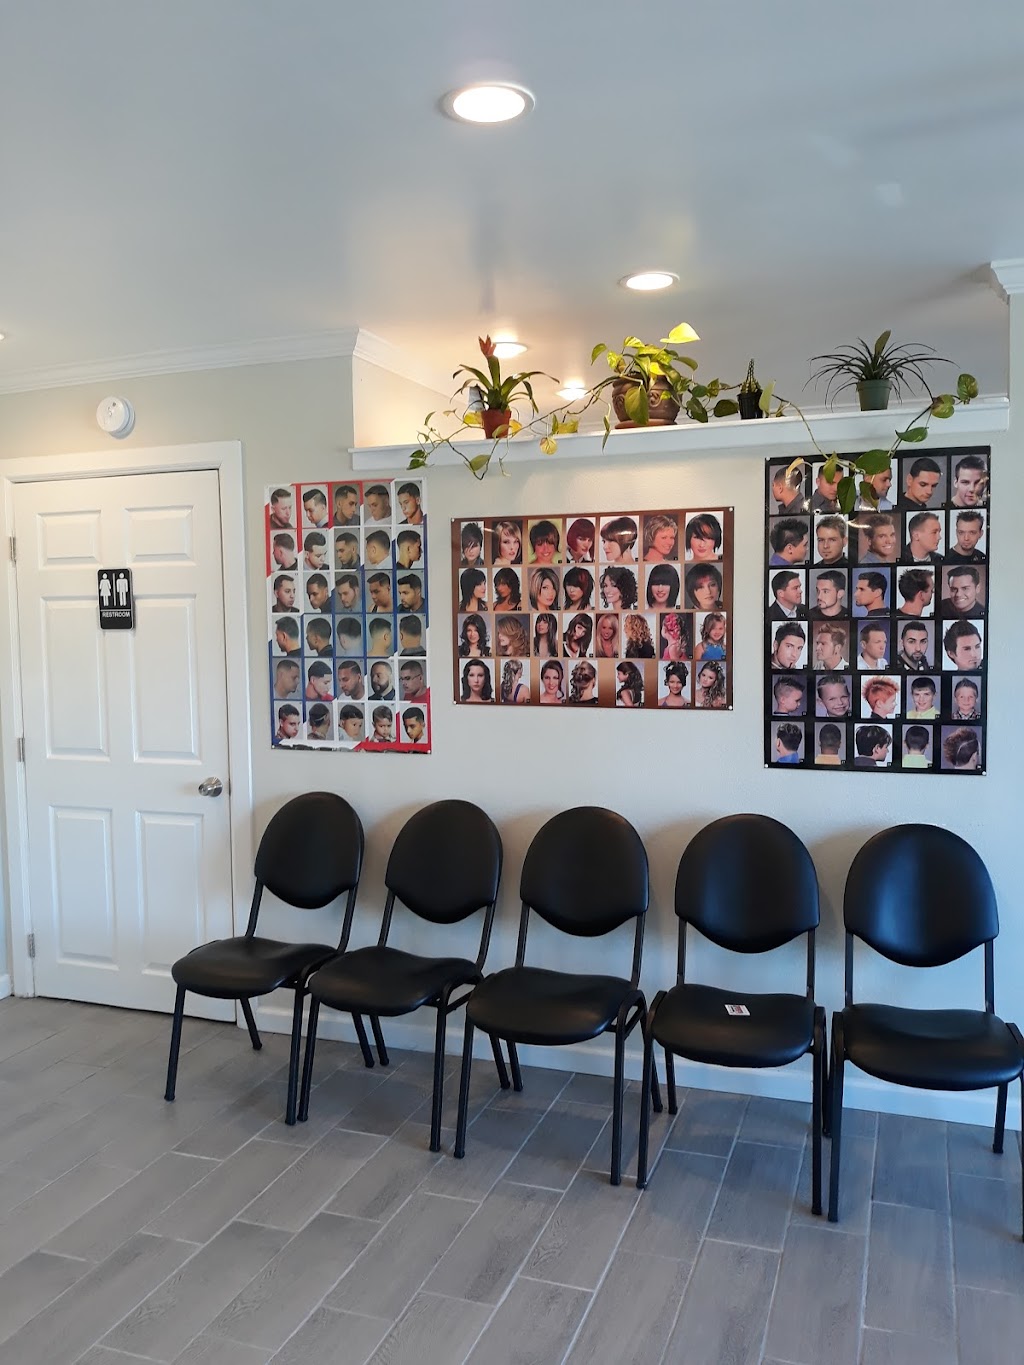 Chicas Como hair & barber salon | 472 N San Jacinto St, Hemet, CA 92543 | Phone: (951) 665-4040